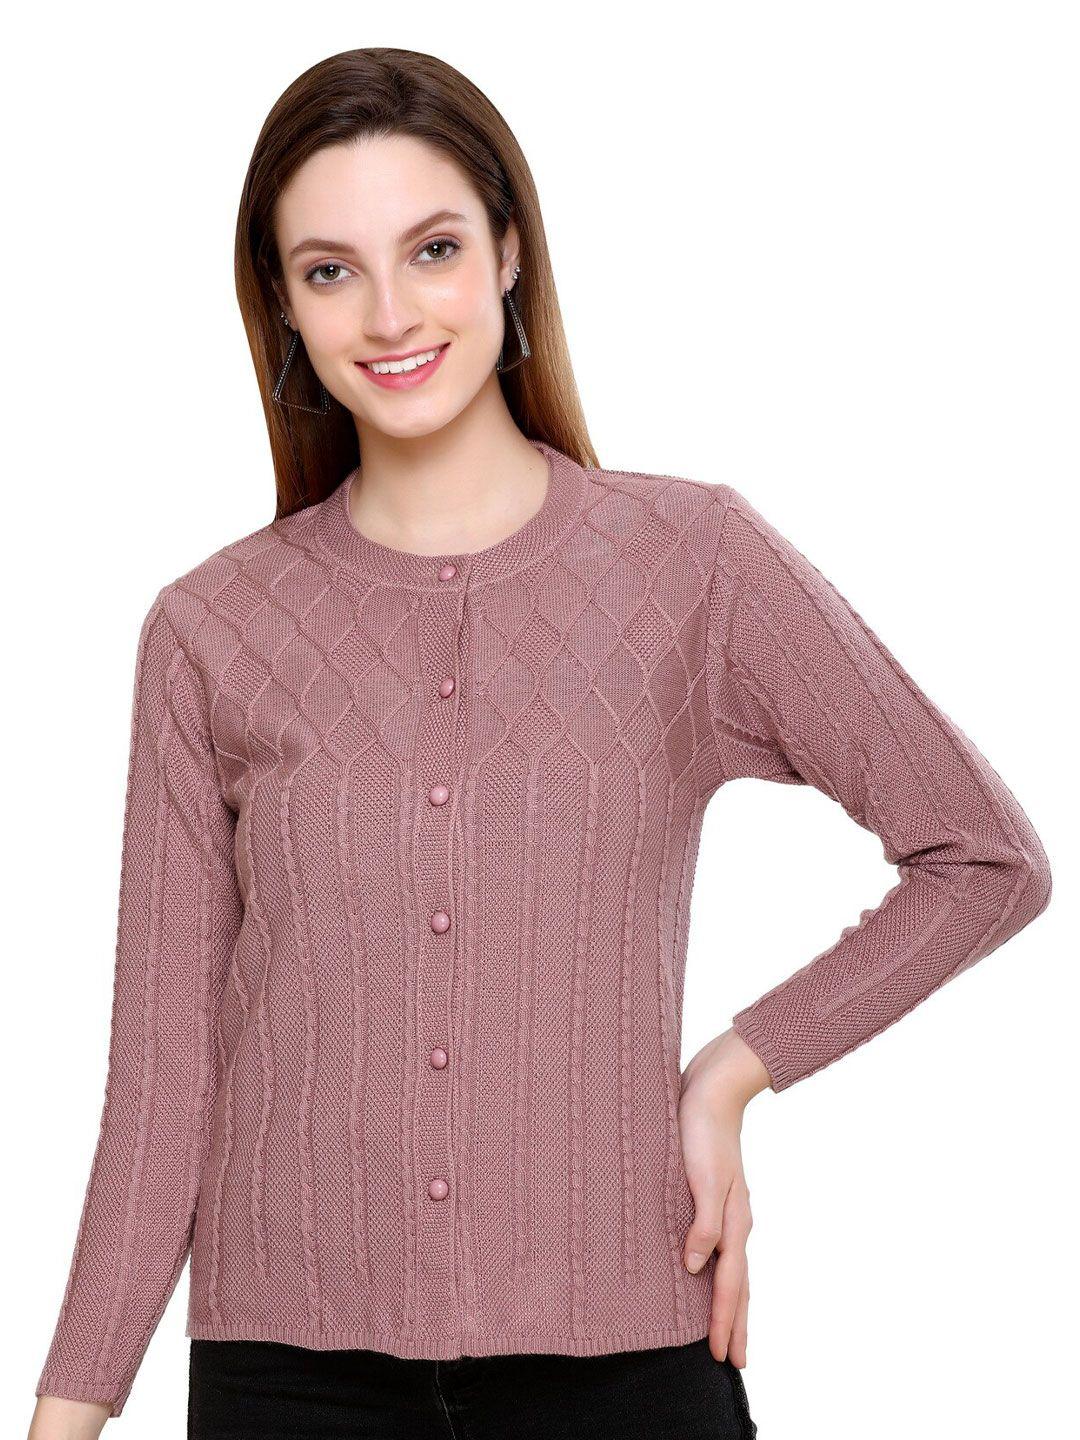 clapton women peach-coloured cable knit woollen cardigan with applique detail